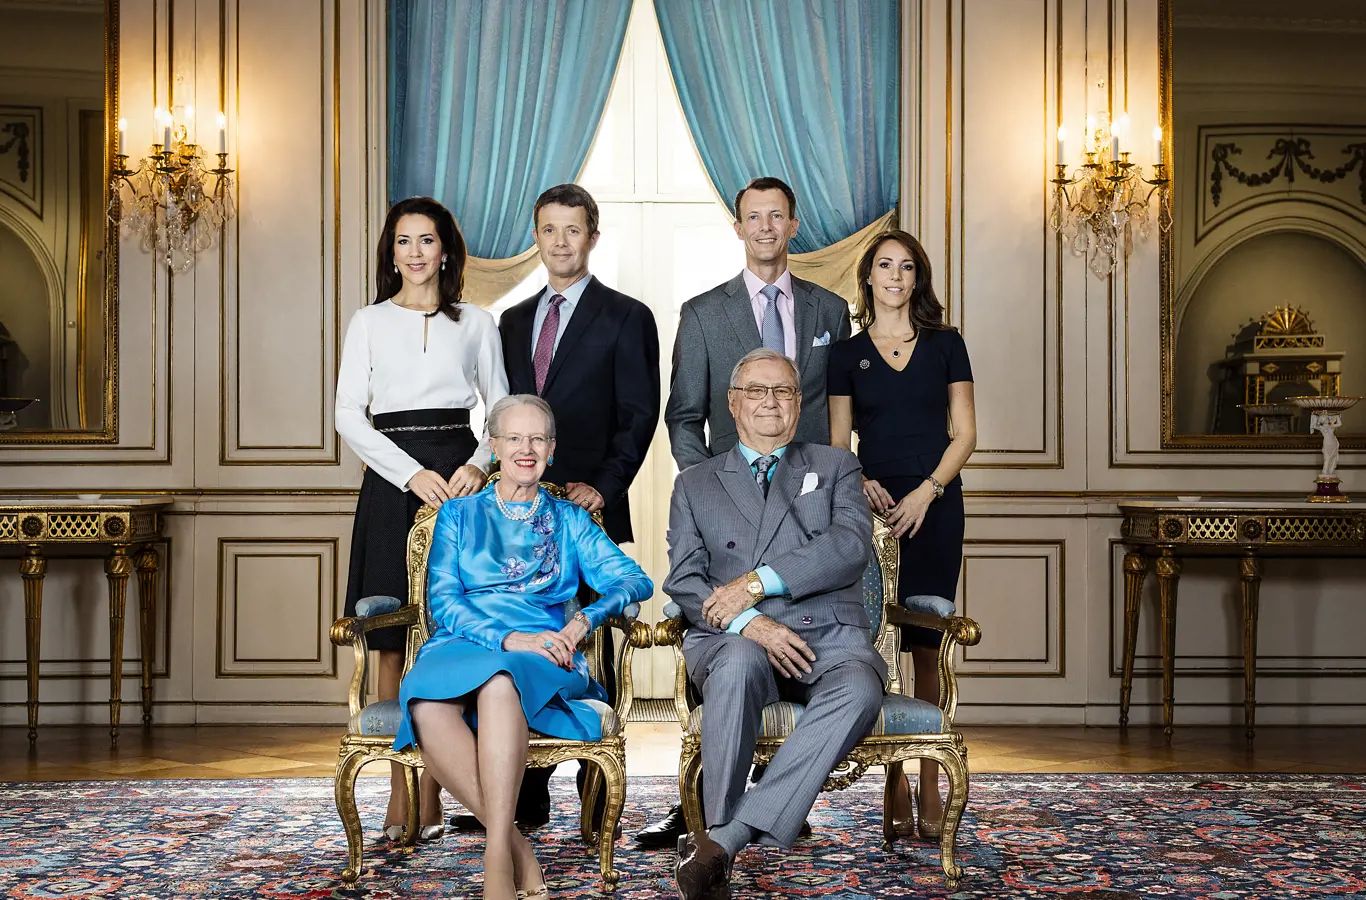 Royal Family Official Portrait on Queen's Birthday in 2016. HM Queen Margrethe II, Prince Henrik (d. 2018), Princess Mary, Crown Prince Henrik, Prince Joachim, Princess Alexandra. Foto: Steen Brogaard, Kongehuset©